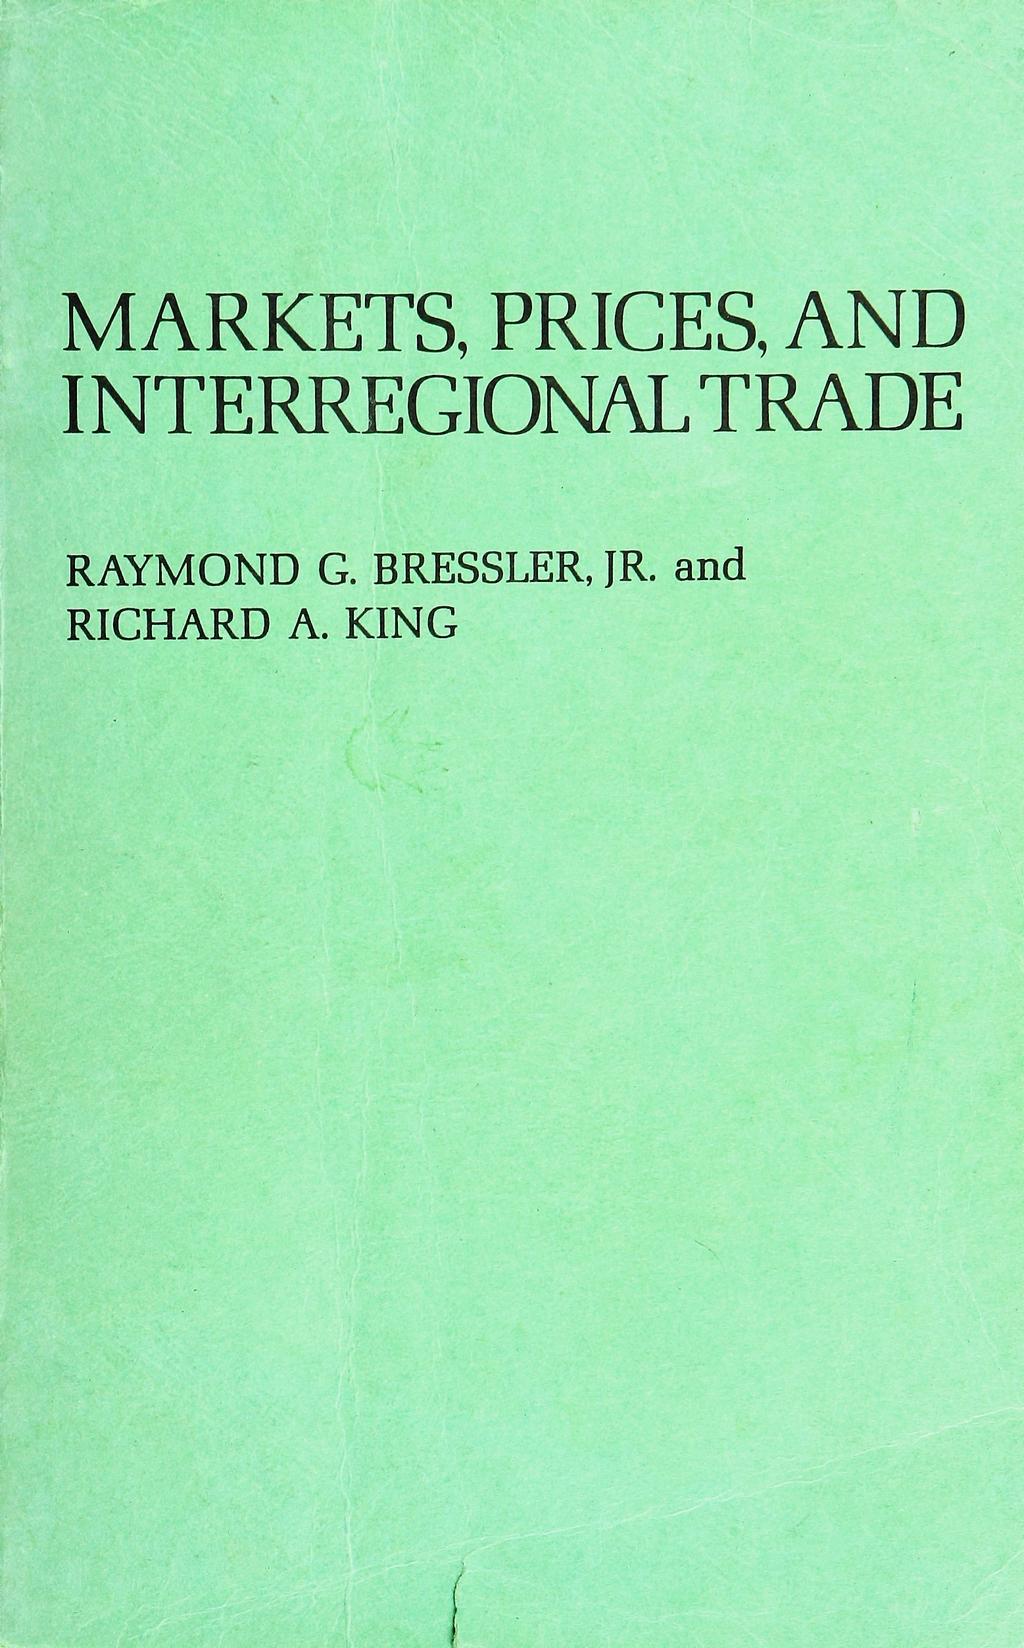 1978 by Mrs Raymond G. Bressler and Richard A. King.